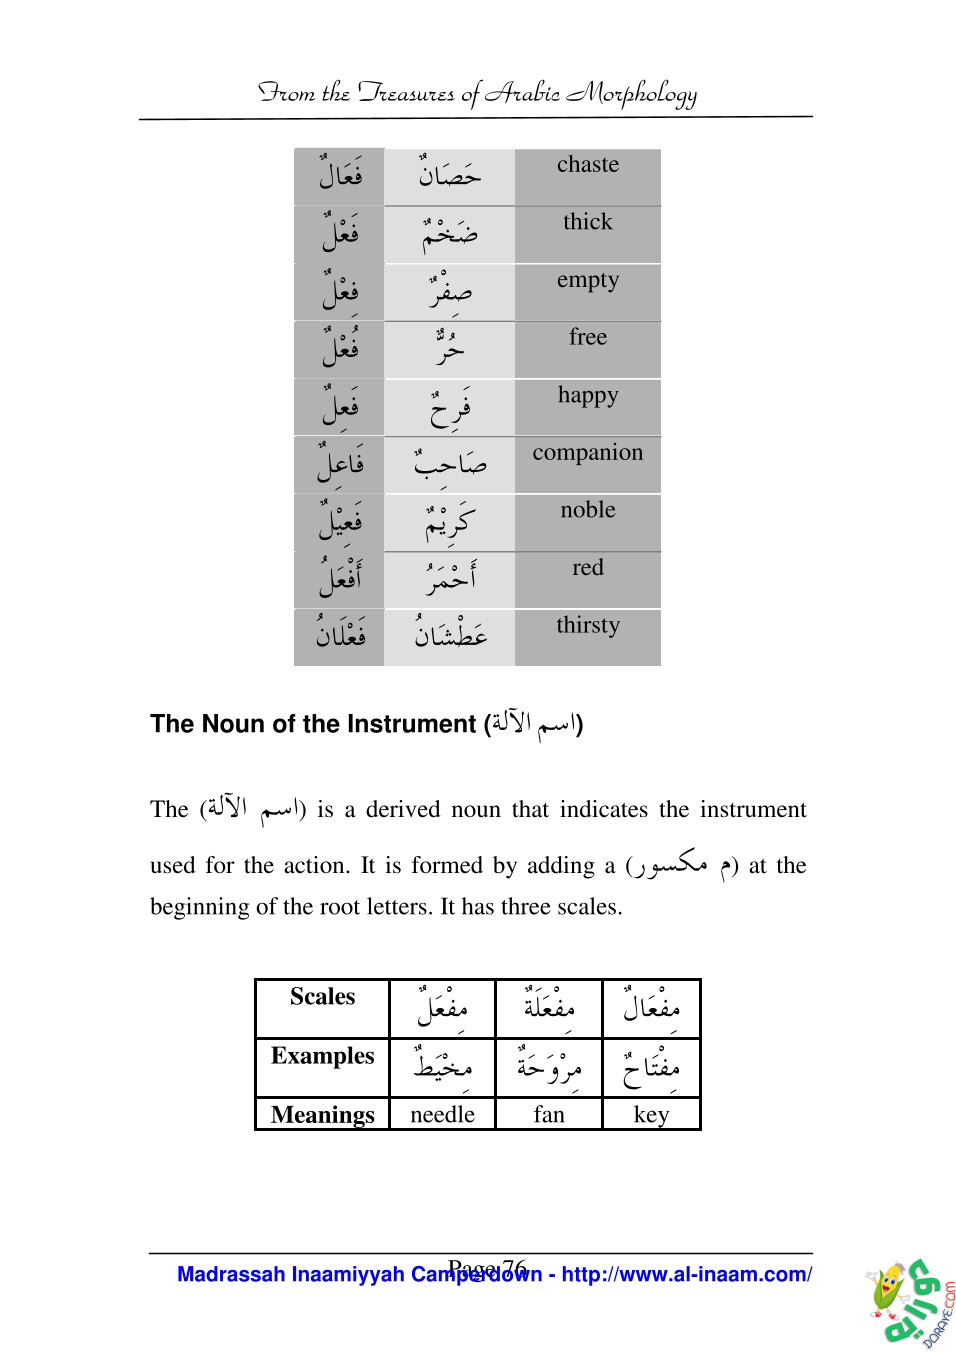 Treasures of Arabic Morphology 076 - كنوز الصرف العربي Treasures of Arabic Morphology